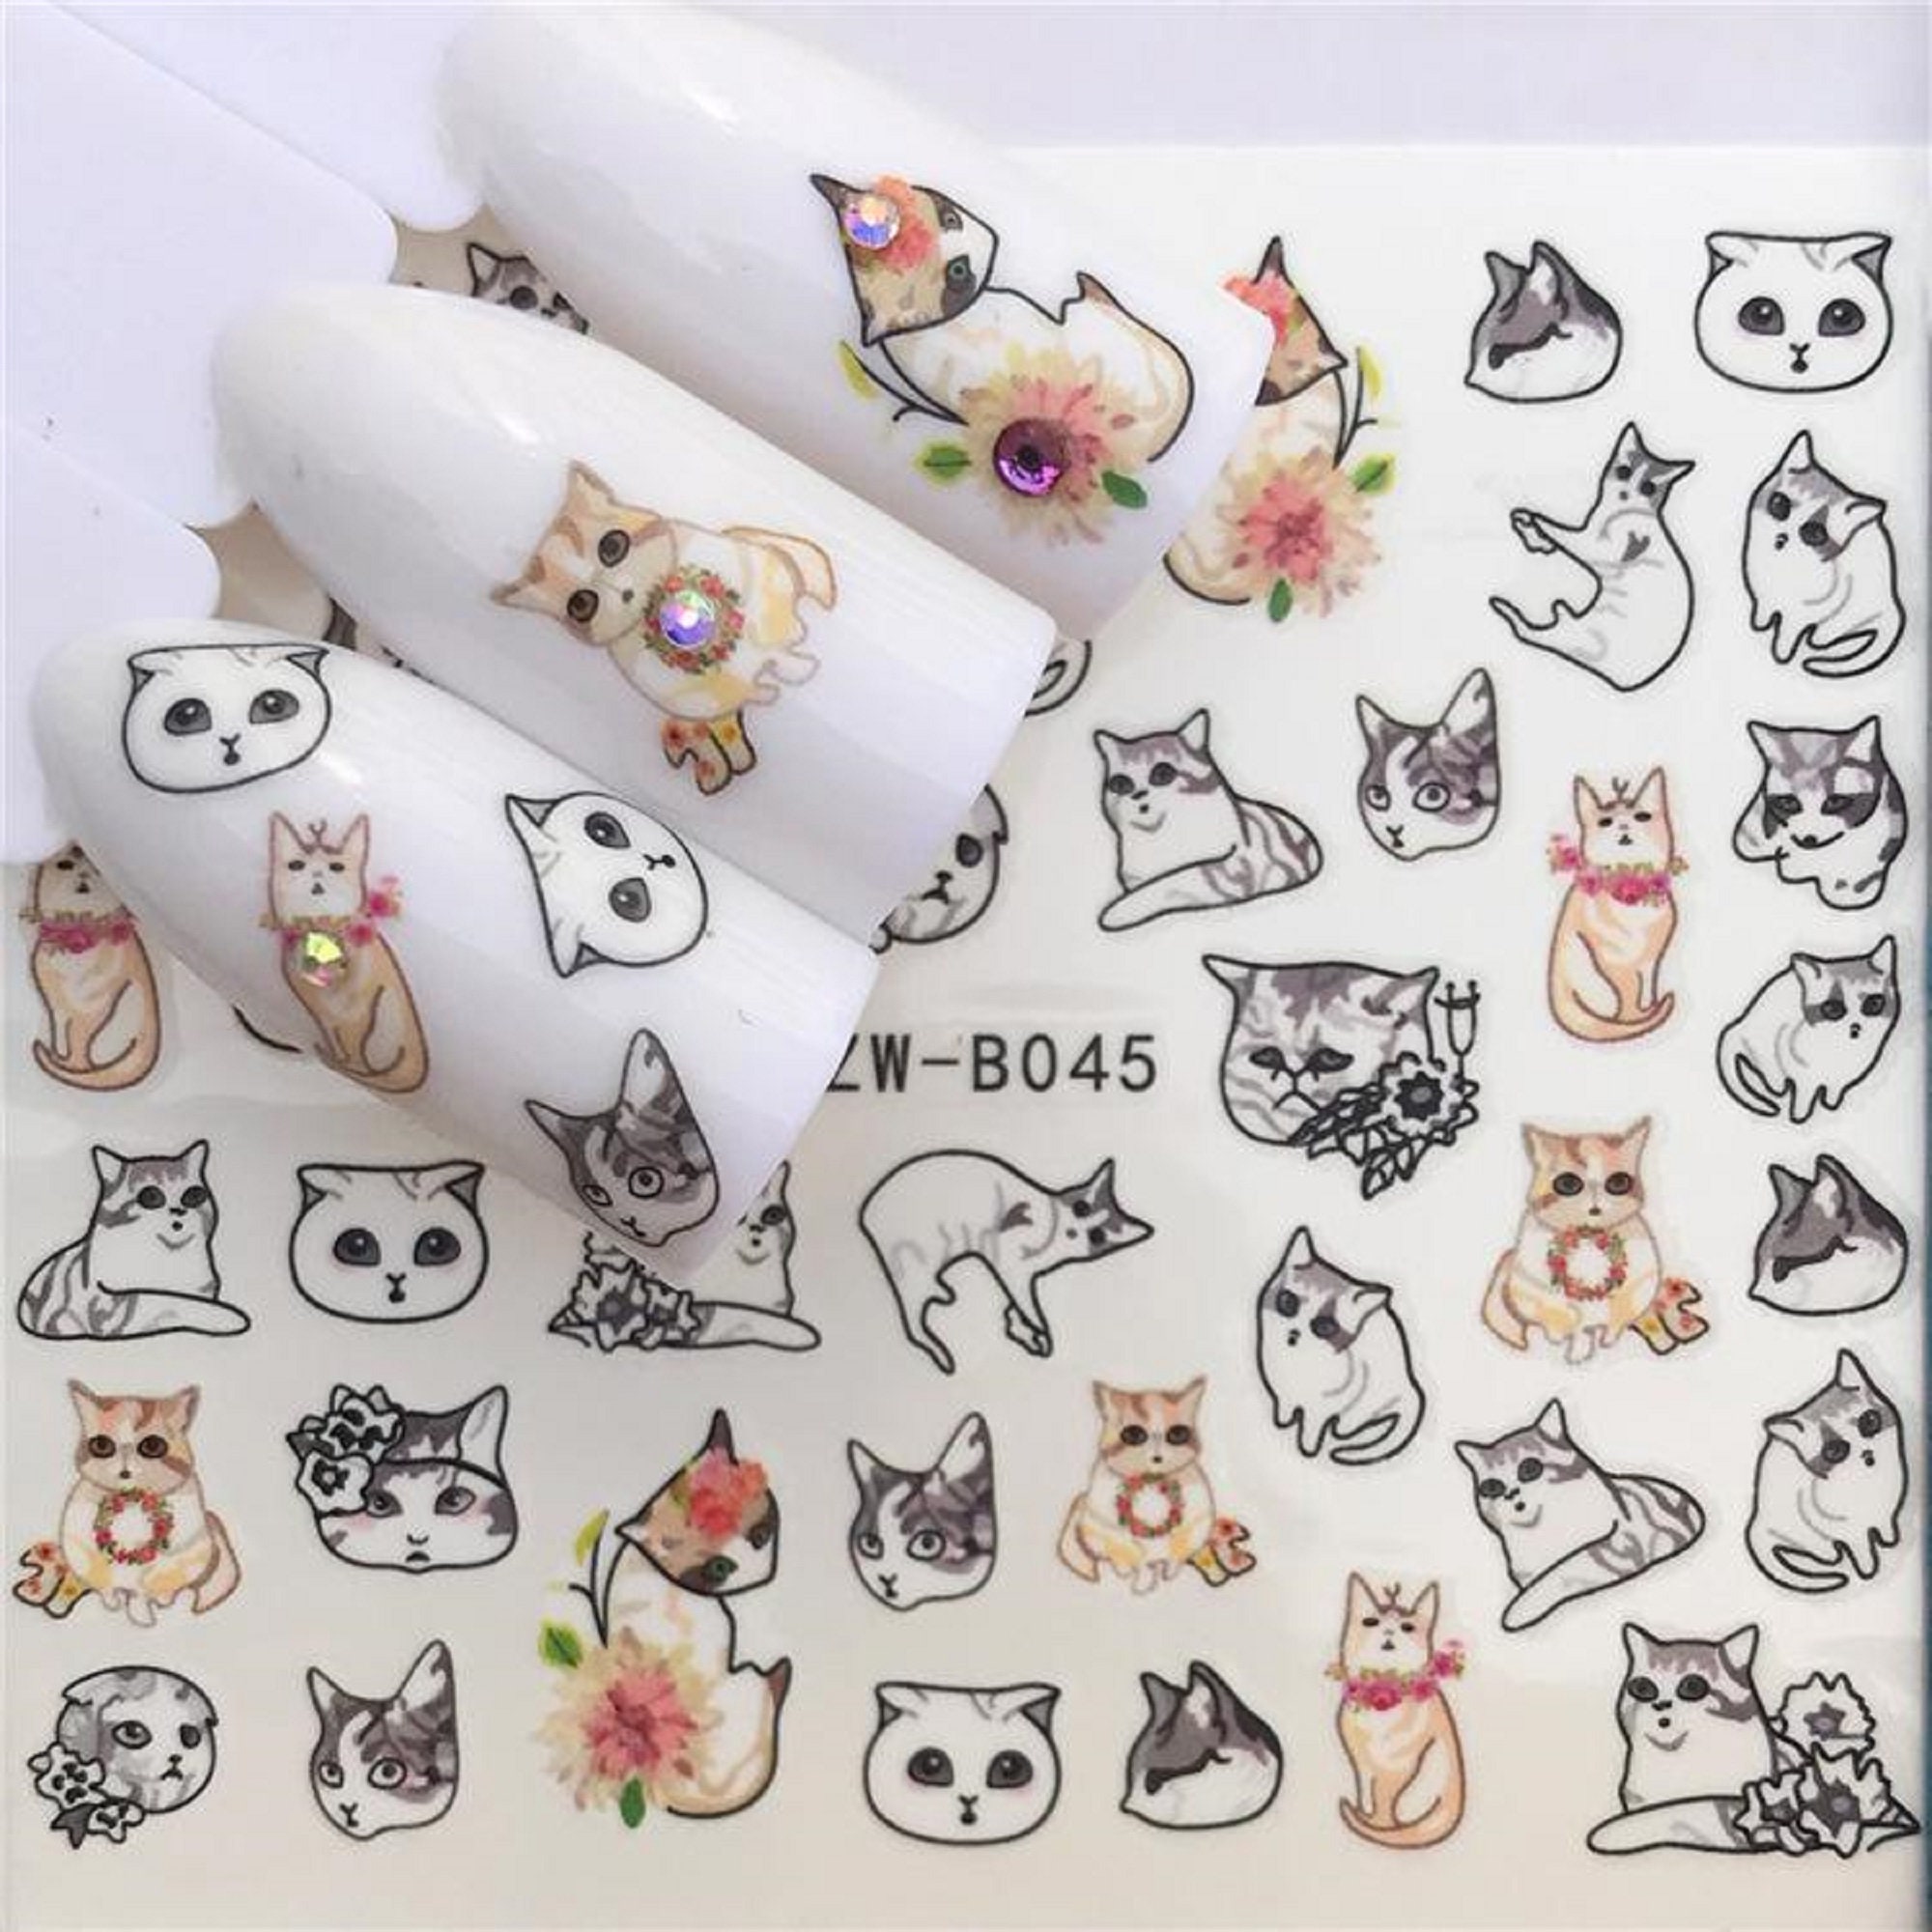 Kawaii Hello Kitty Nail Stickers Decals 2 Sheets Cartoon Characters Cat【A】